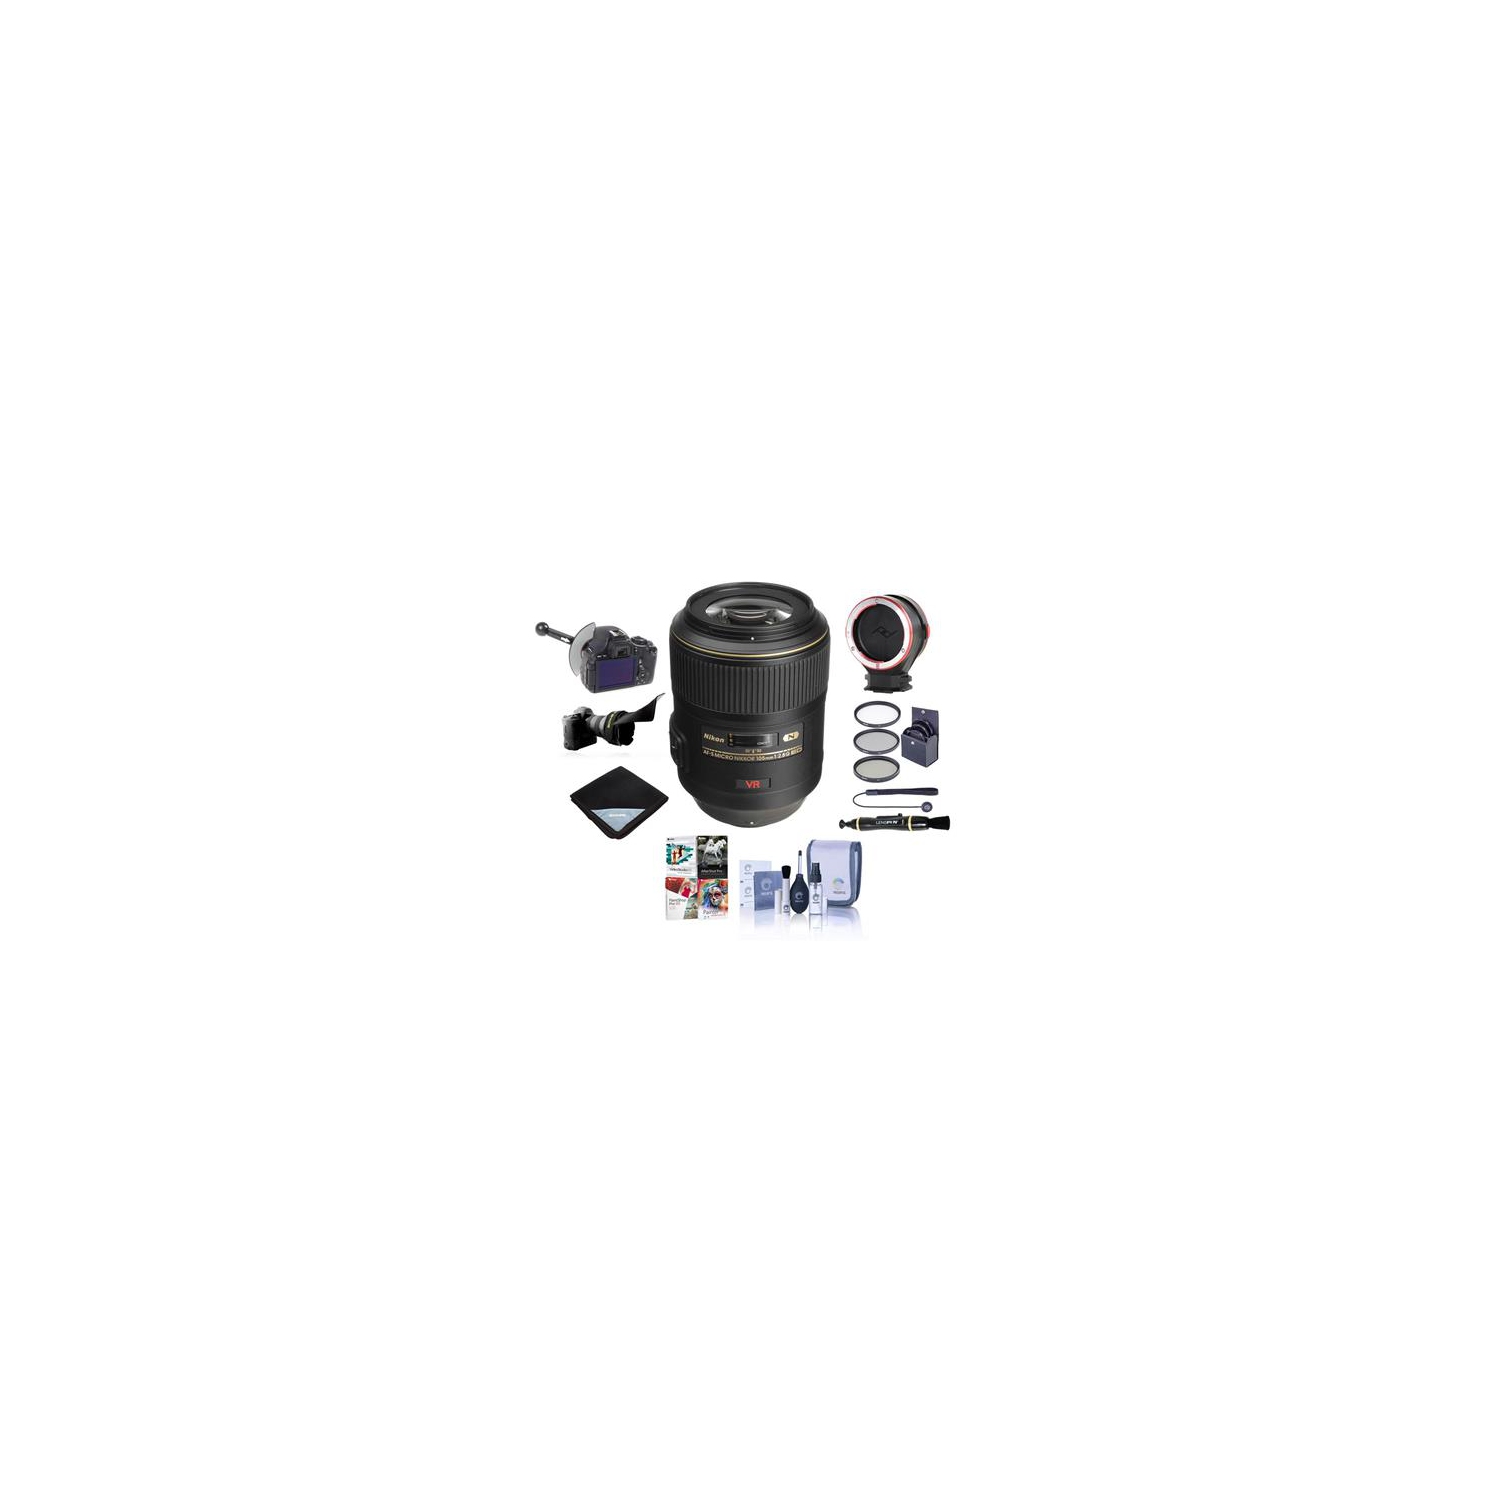 Nikon 105mm f/2.8G ED-IF AFS VR Micro NIKKOR Lens USA W/Pro Acc Bundle - US Version w/ Seller Warranty